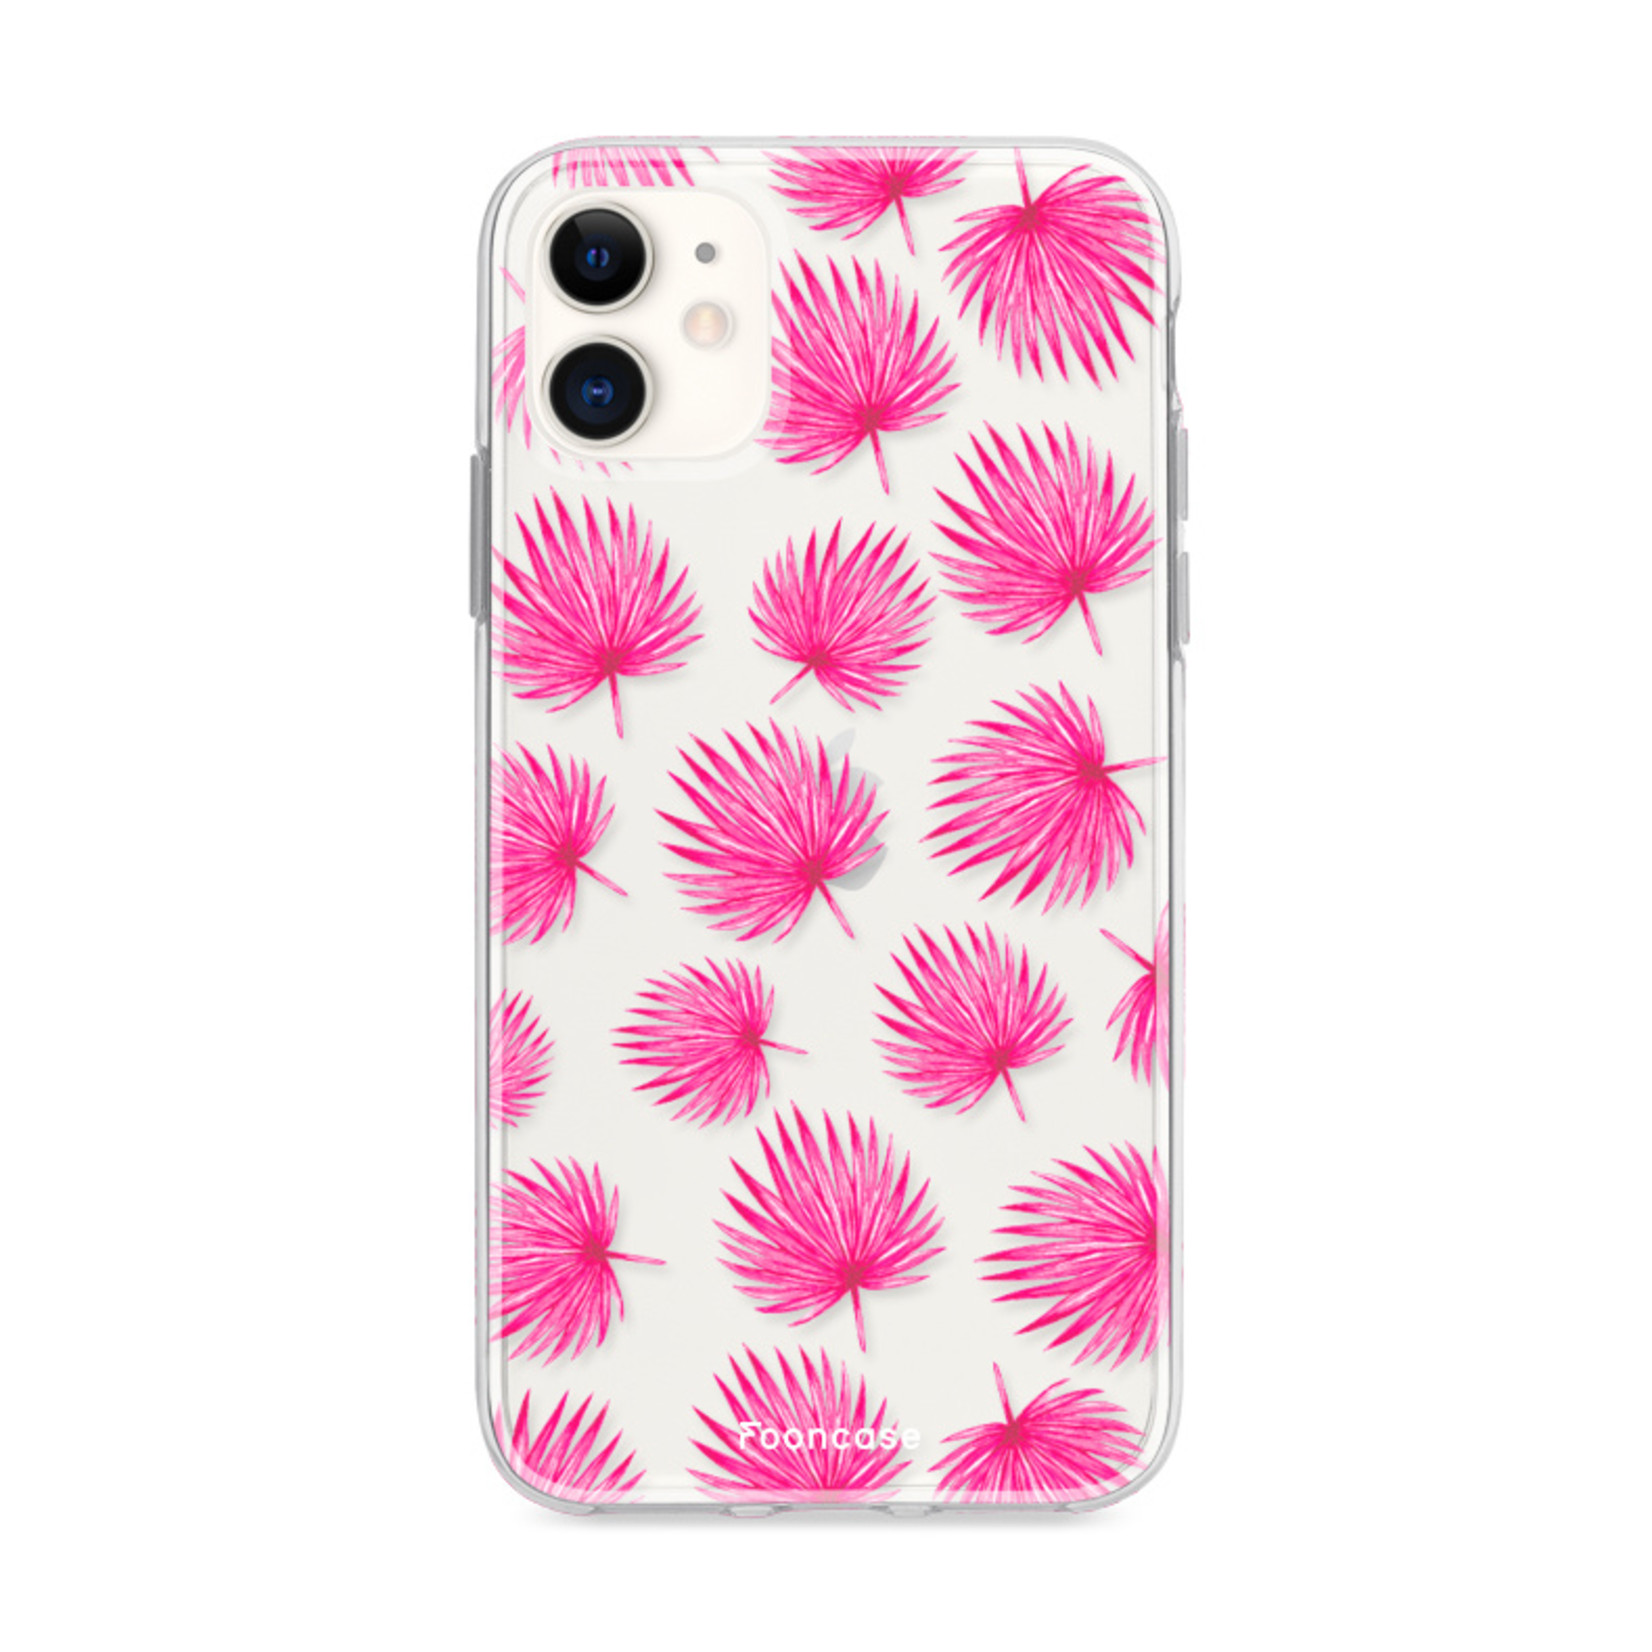 FOONCASE Iphone 11 Case - Pink leaves